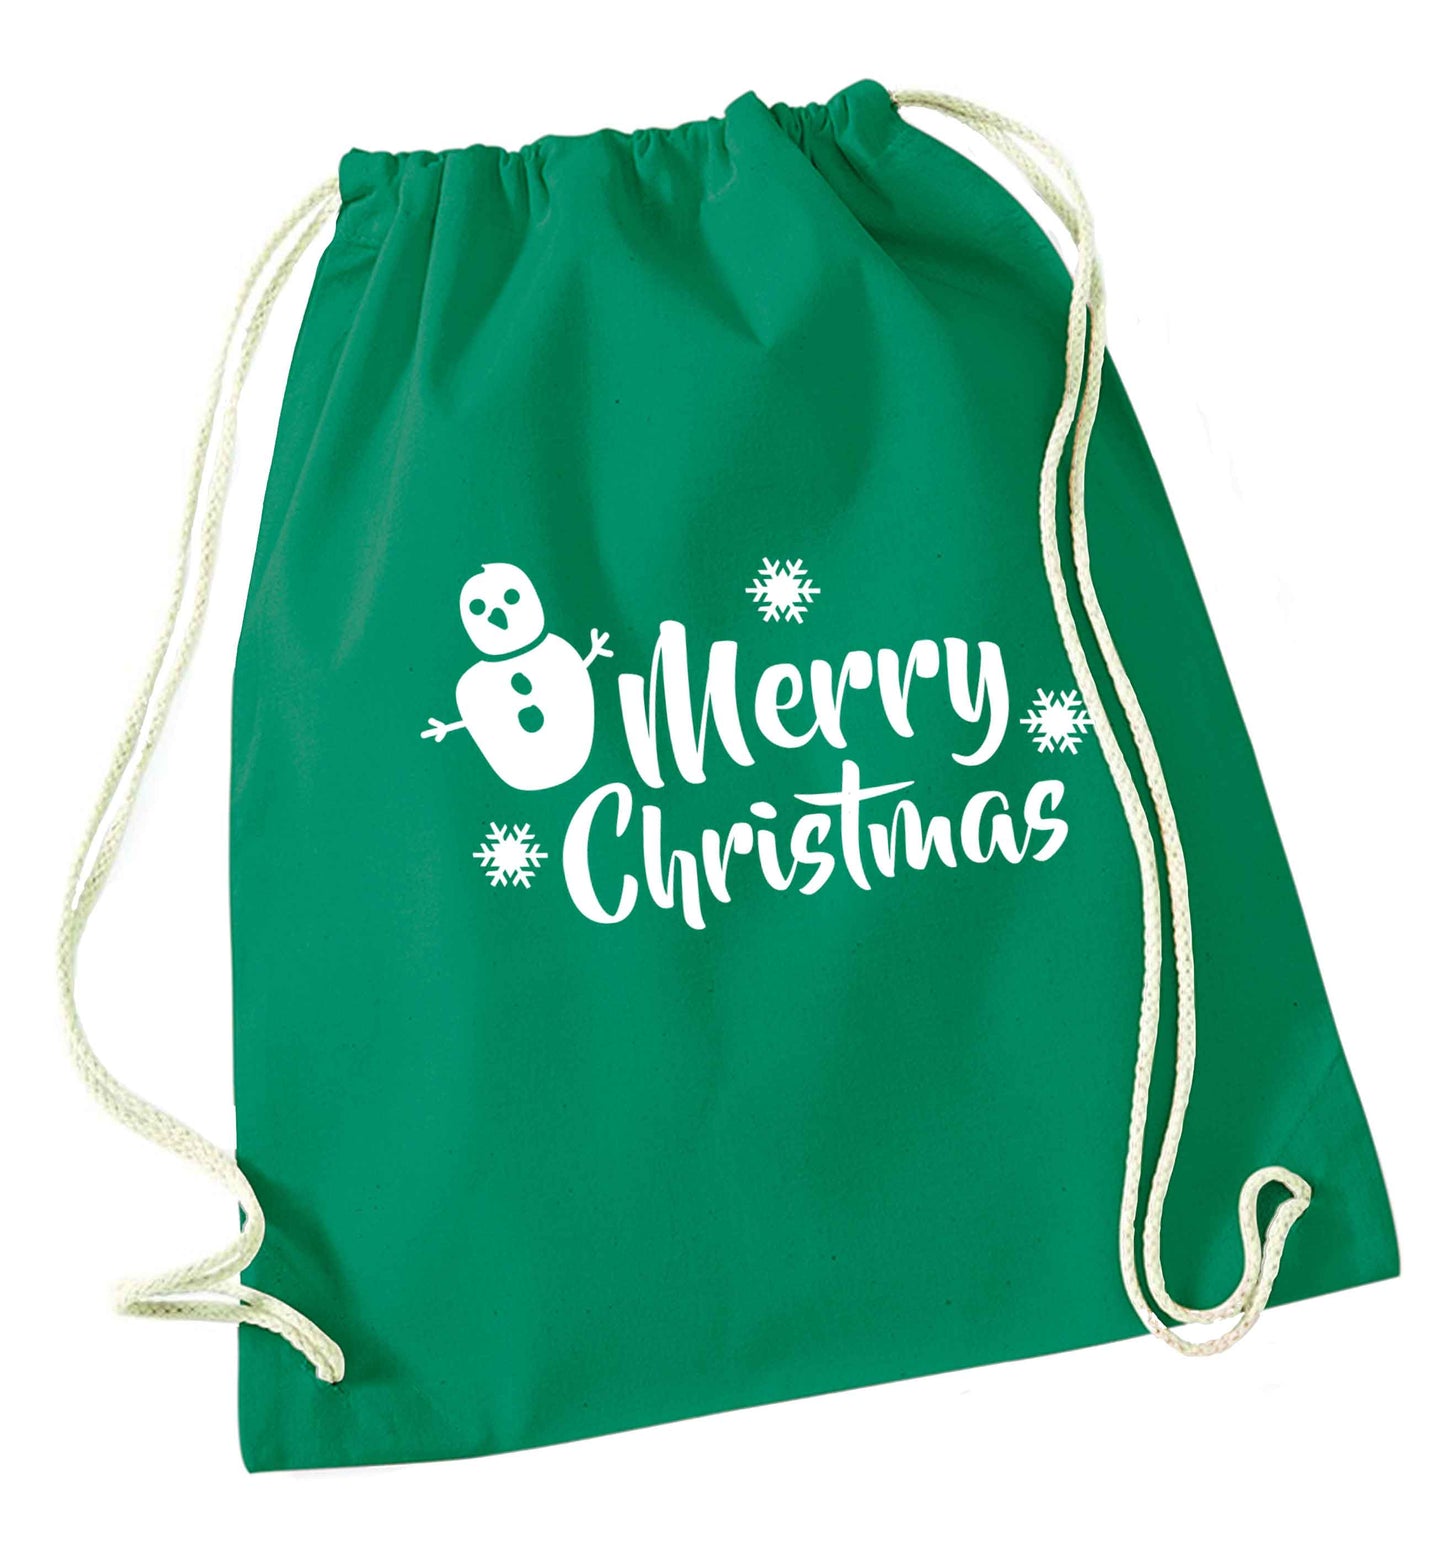 Merry Christmas - snowman green drawstring bag